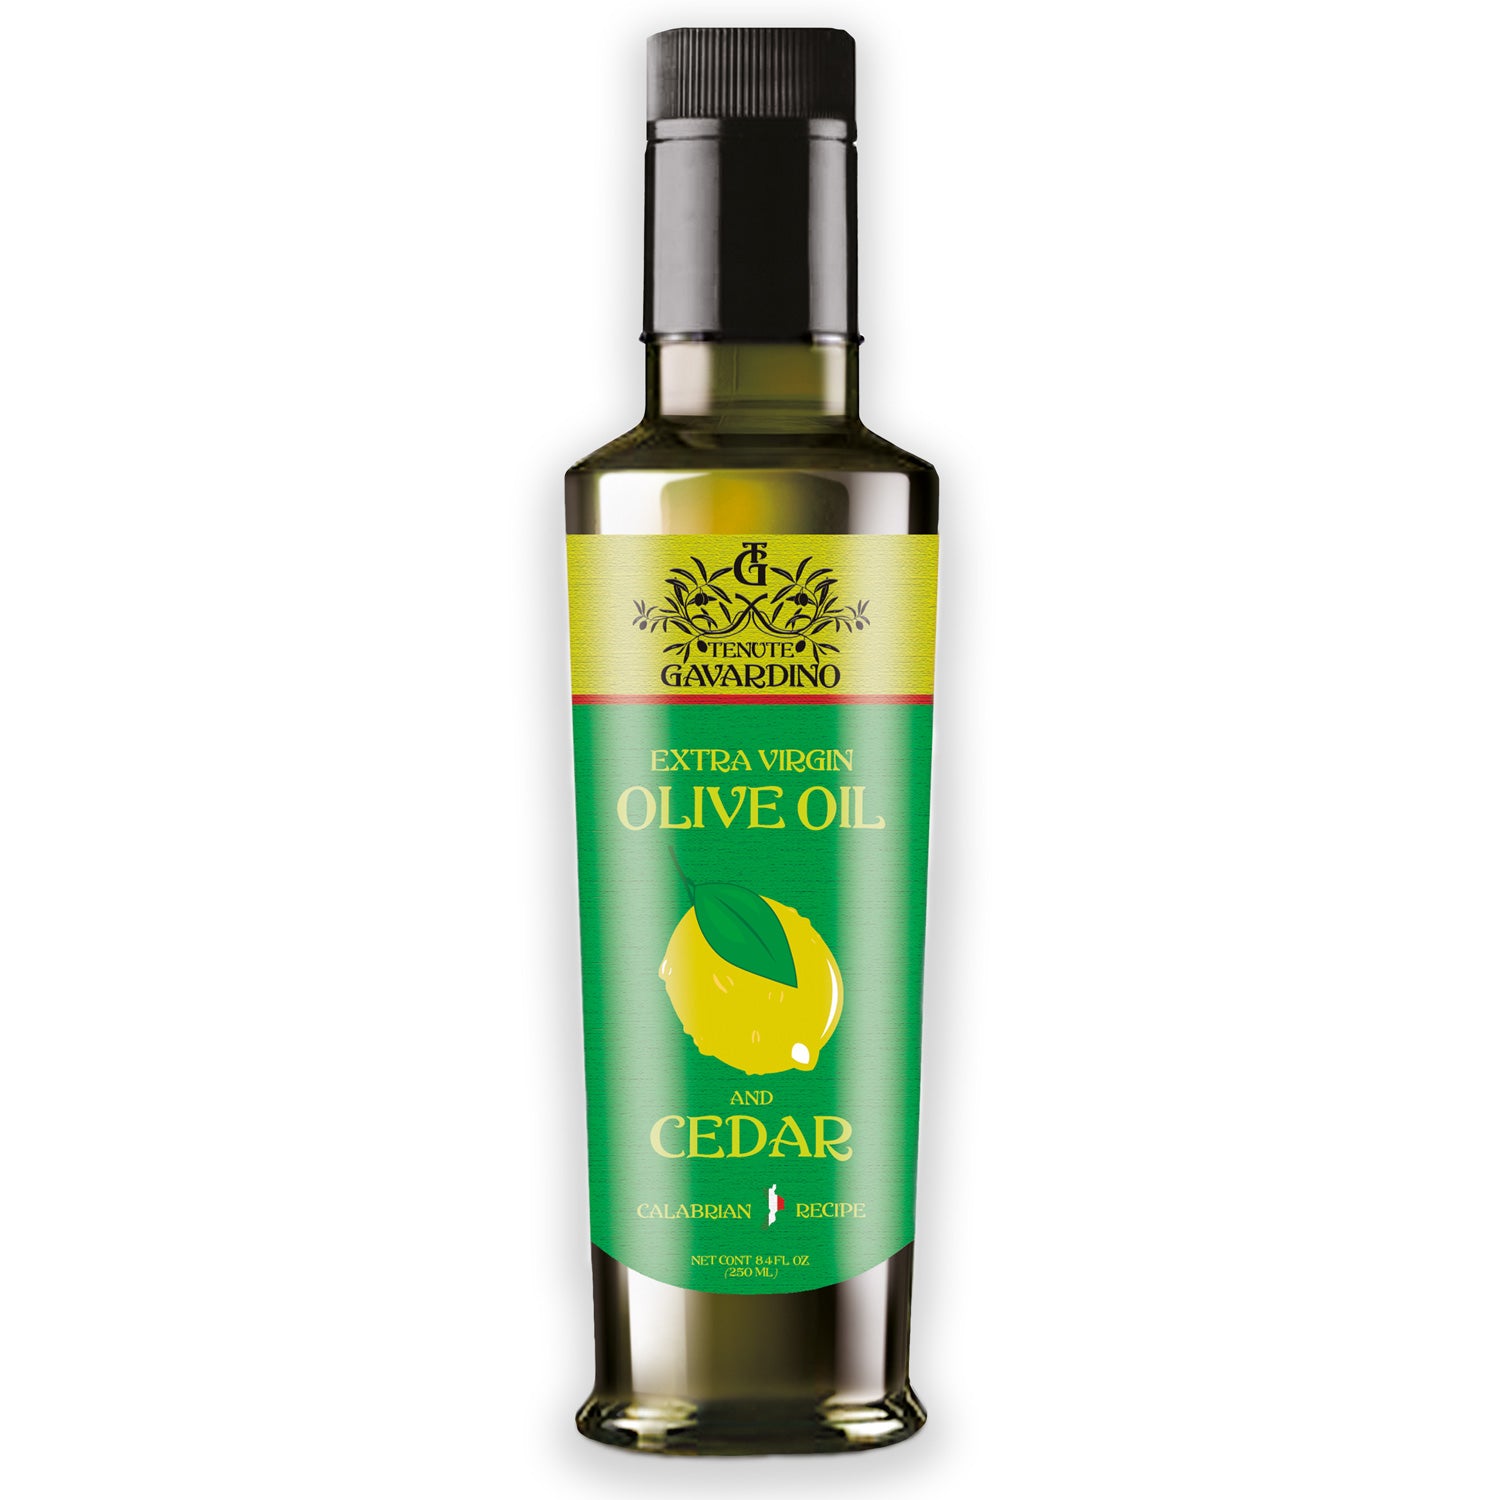 Tenute Gavardino Extra Virgin Olive Oil with Cedar